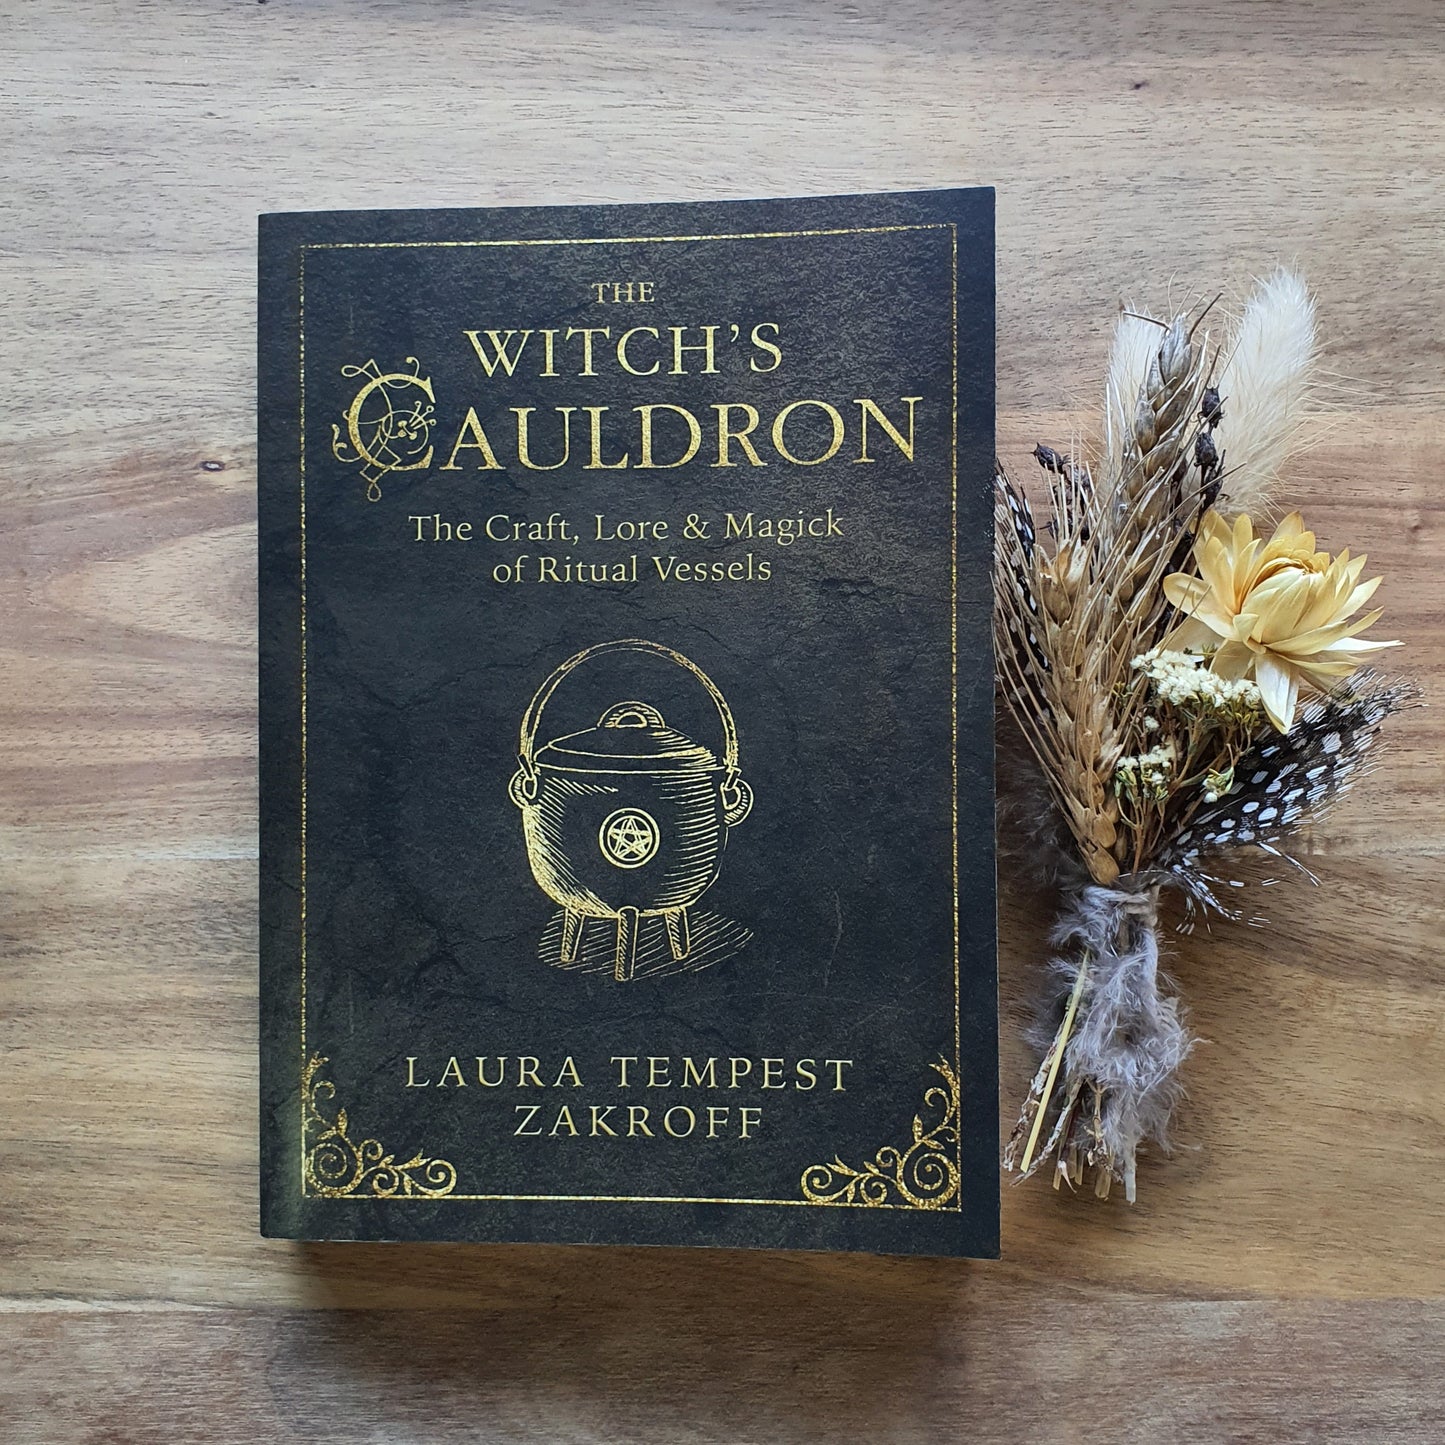 The Witch’s Cauldron